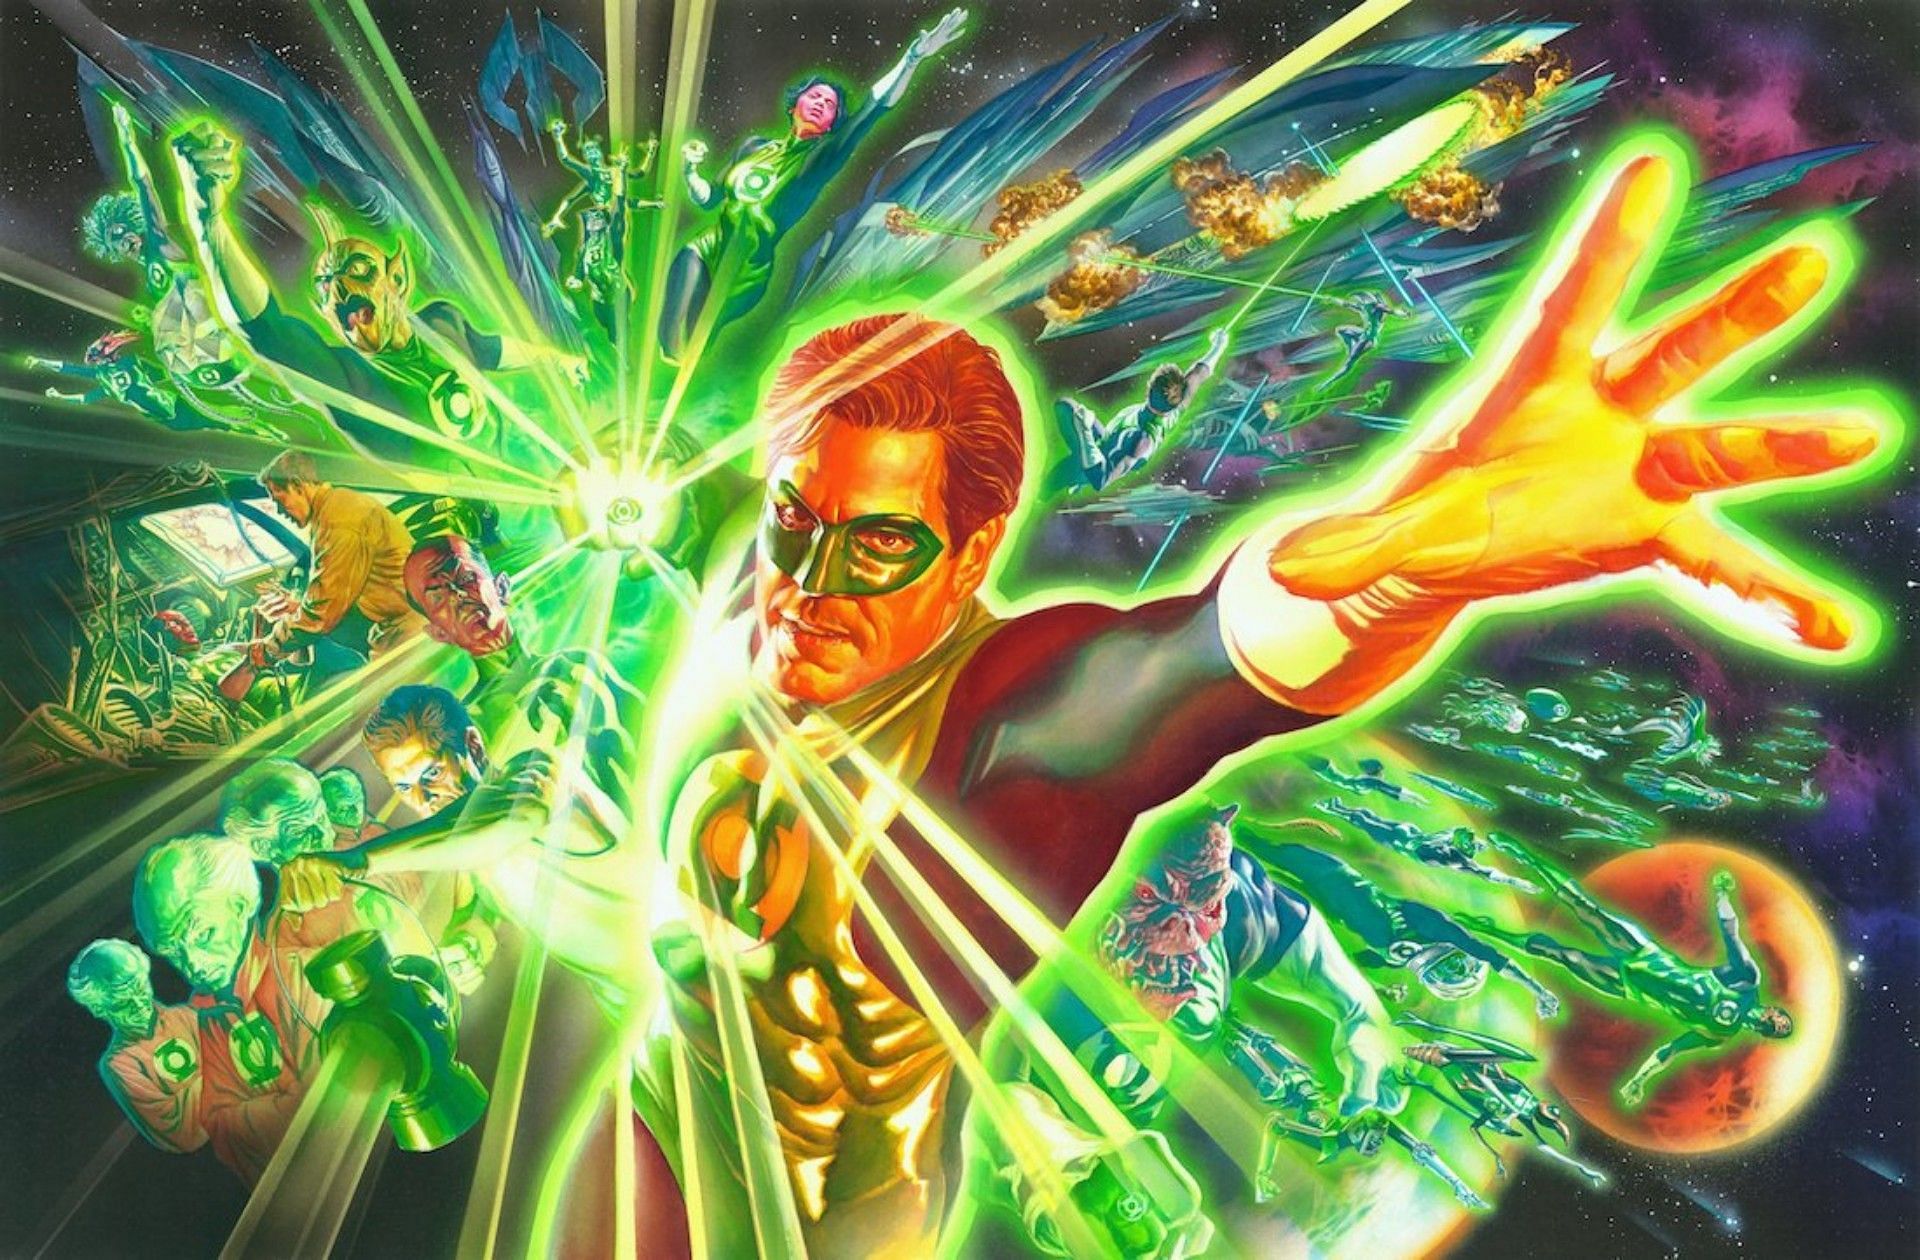 Green Lantern Corps (Image via Alex Ross/Twitter)